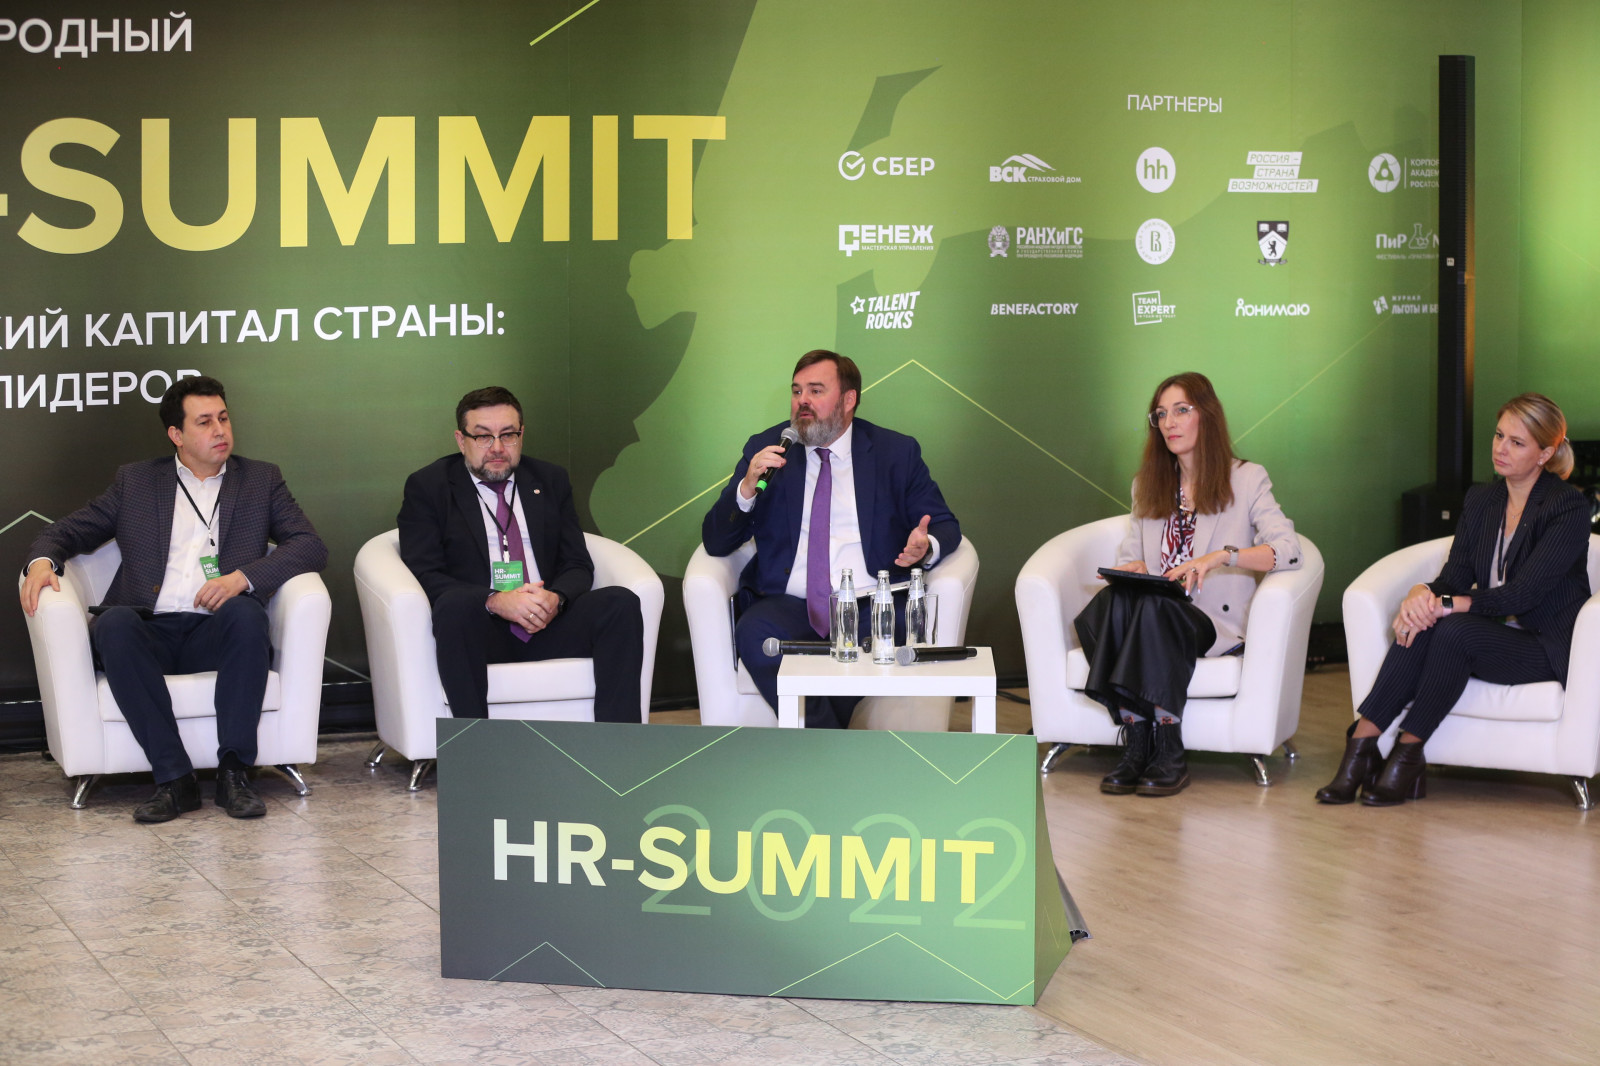 HR-саммит. Международный HR саммит Нижний Новгород. HR Summit купно. Выставка HR Summit.